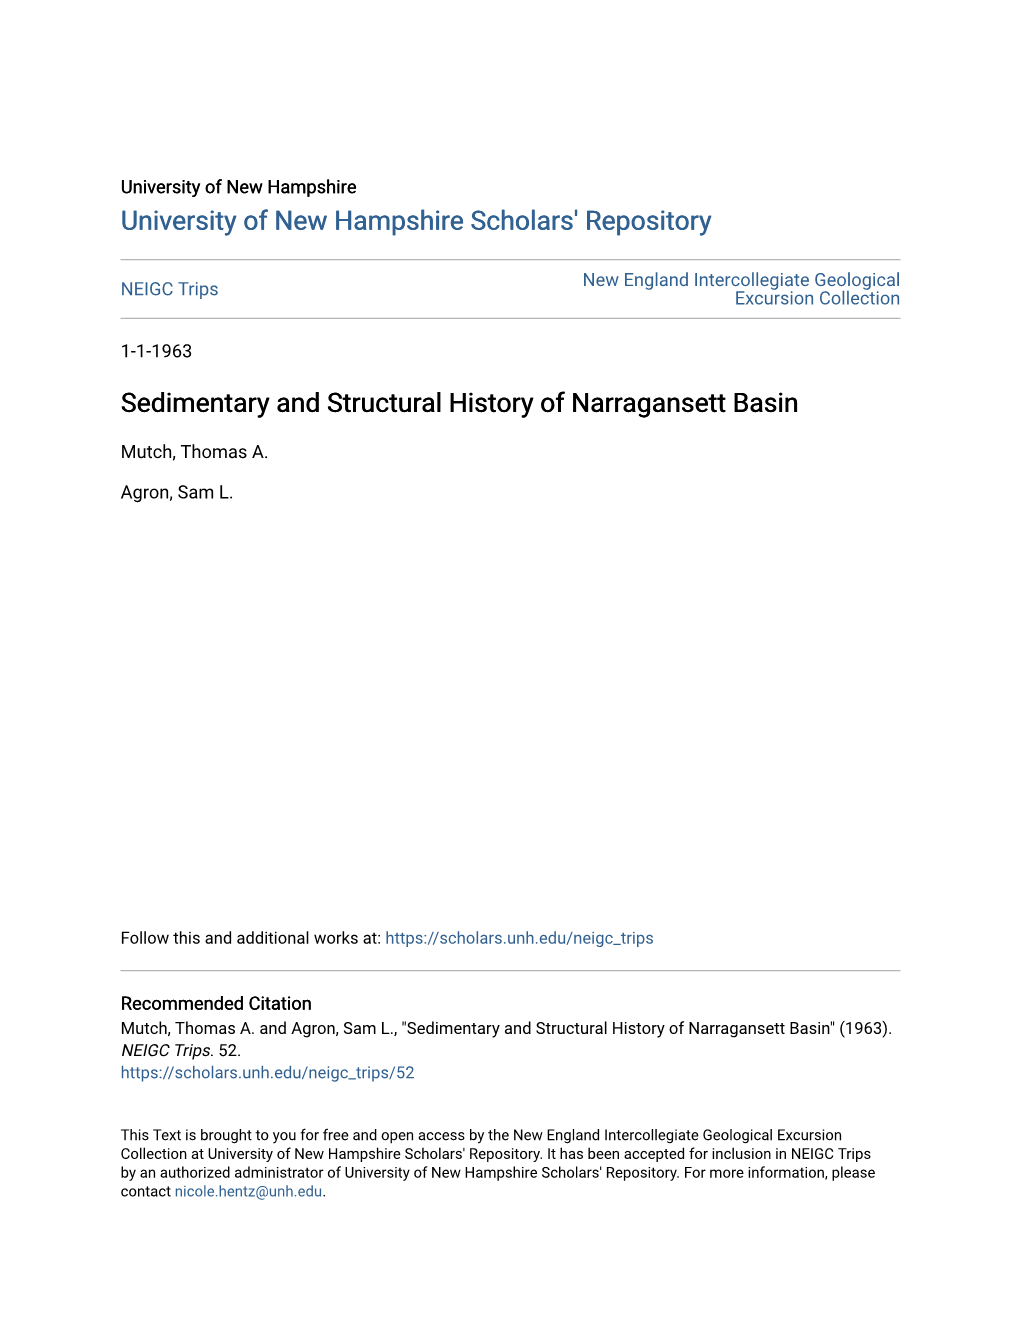 Sedimentary and Structural History of Narragansett Basin